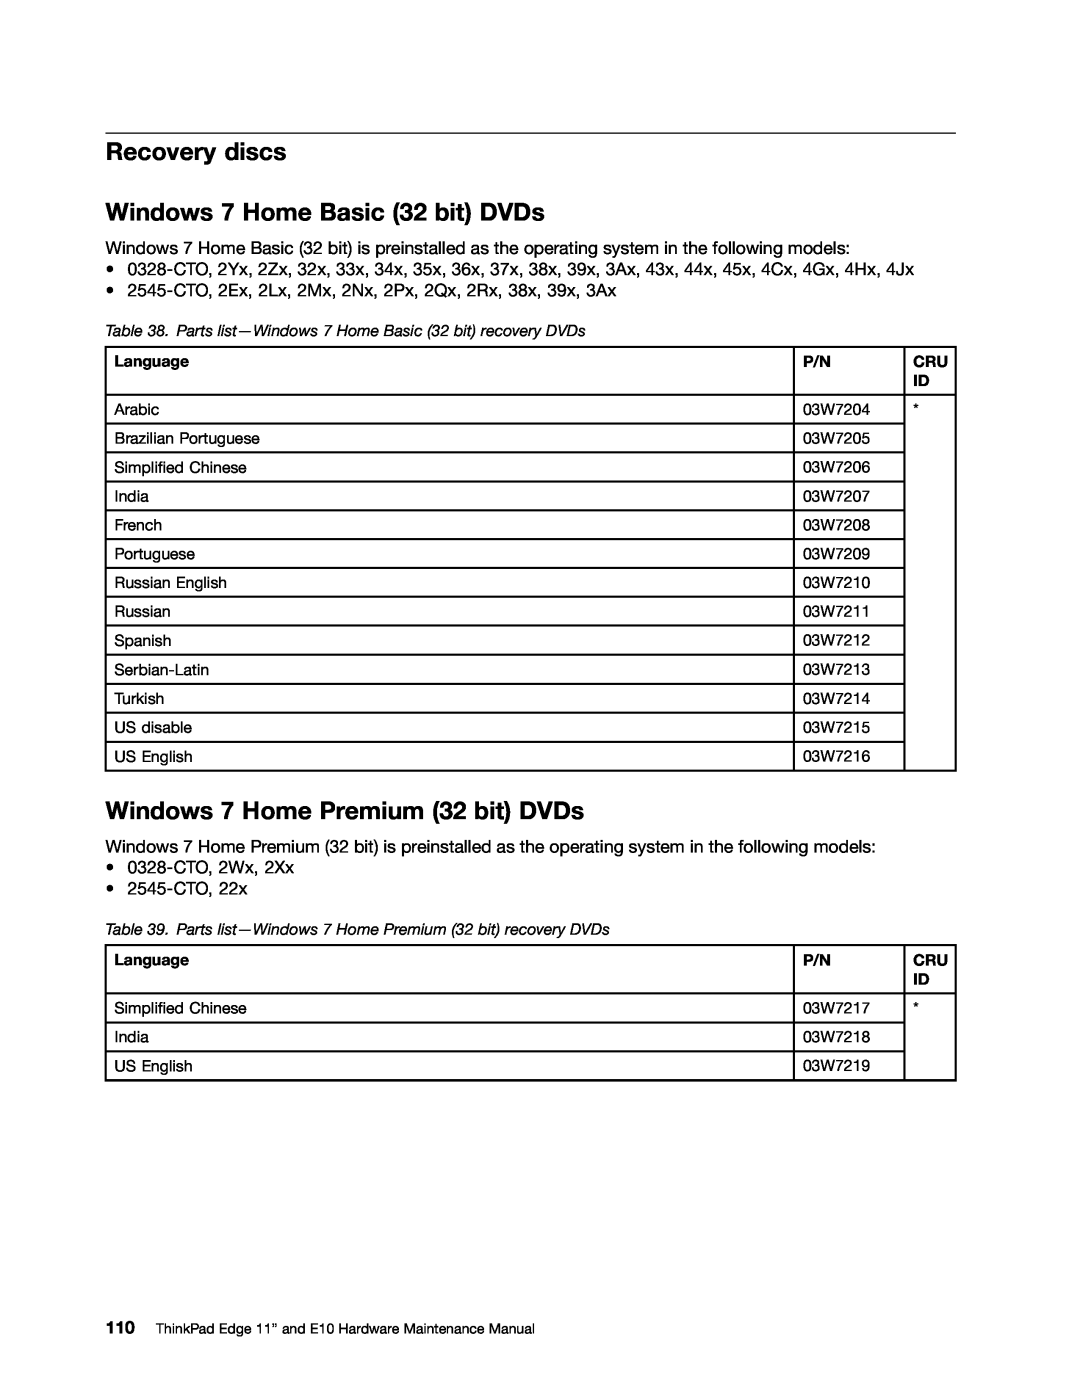 Lenovo E10 manual Recovery discs Windows 7 Home Basic 32 bit DVDs, Windows 7 Home Premium 32 bit DVDs 